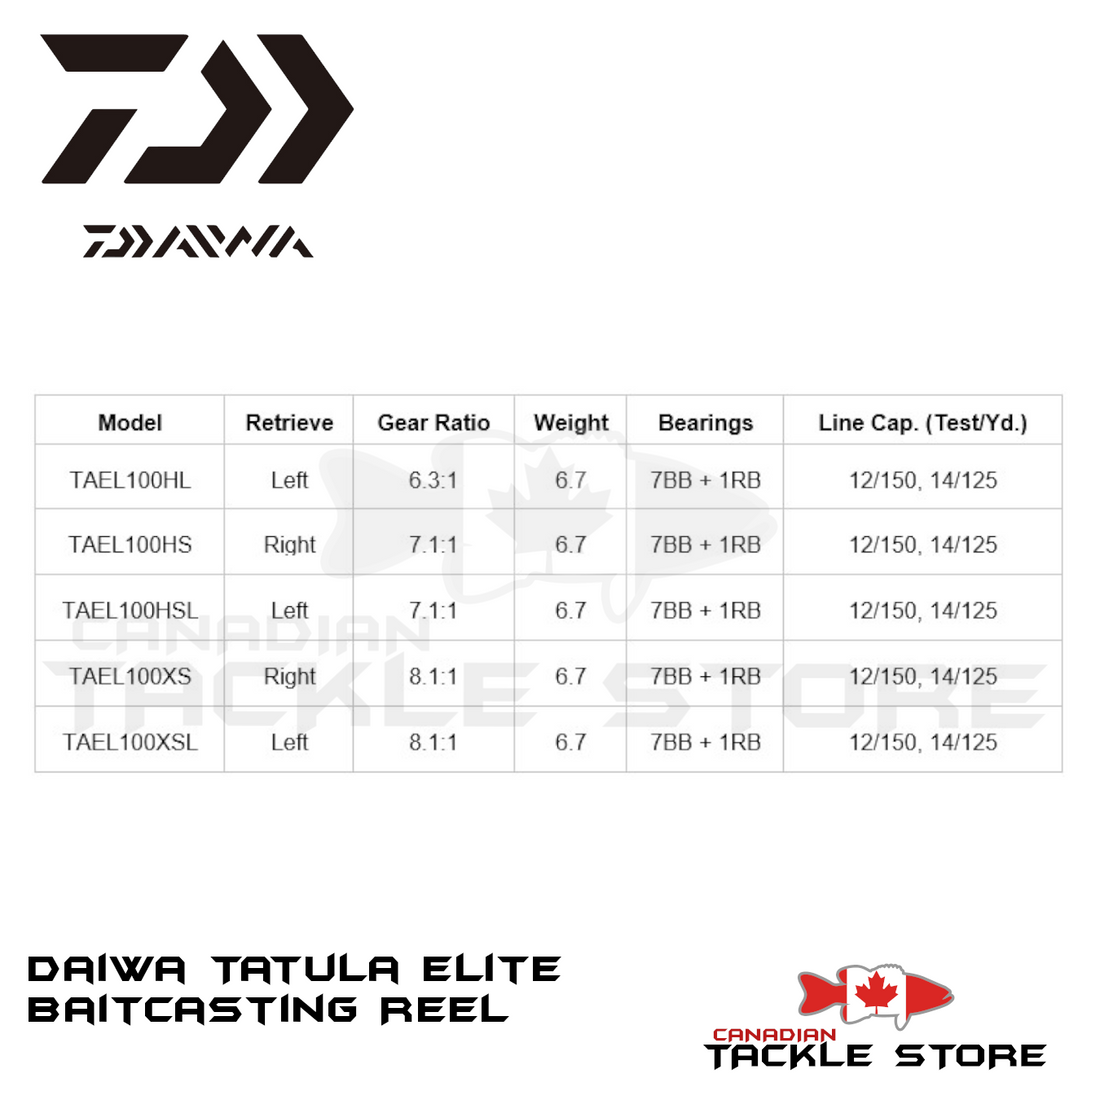 Daiwa Tatula Elite Baitcast Reel